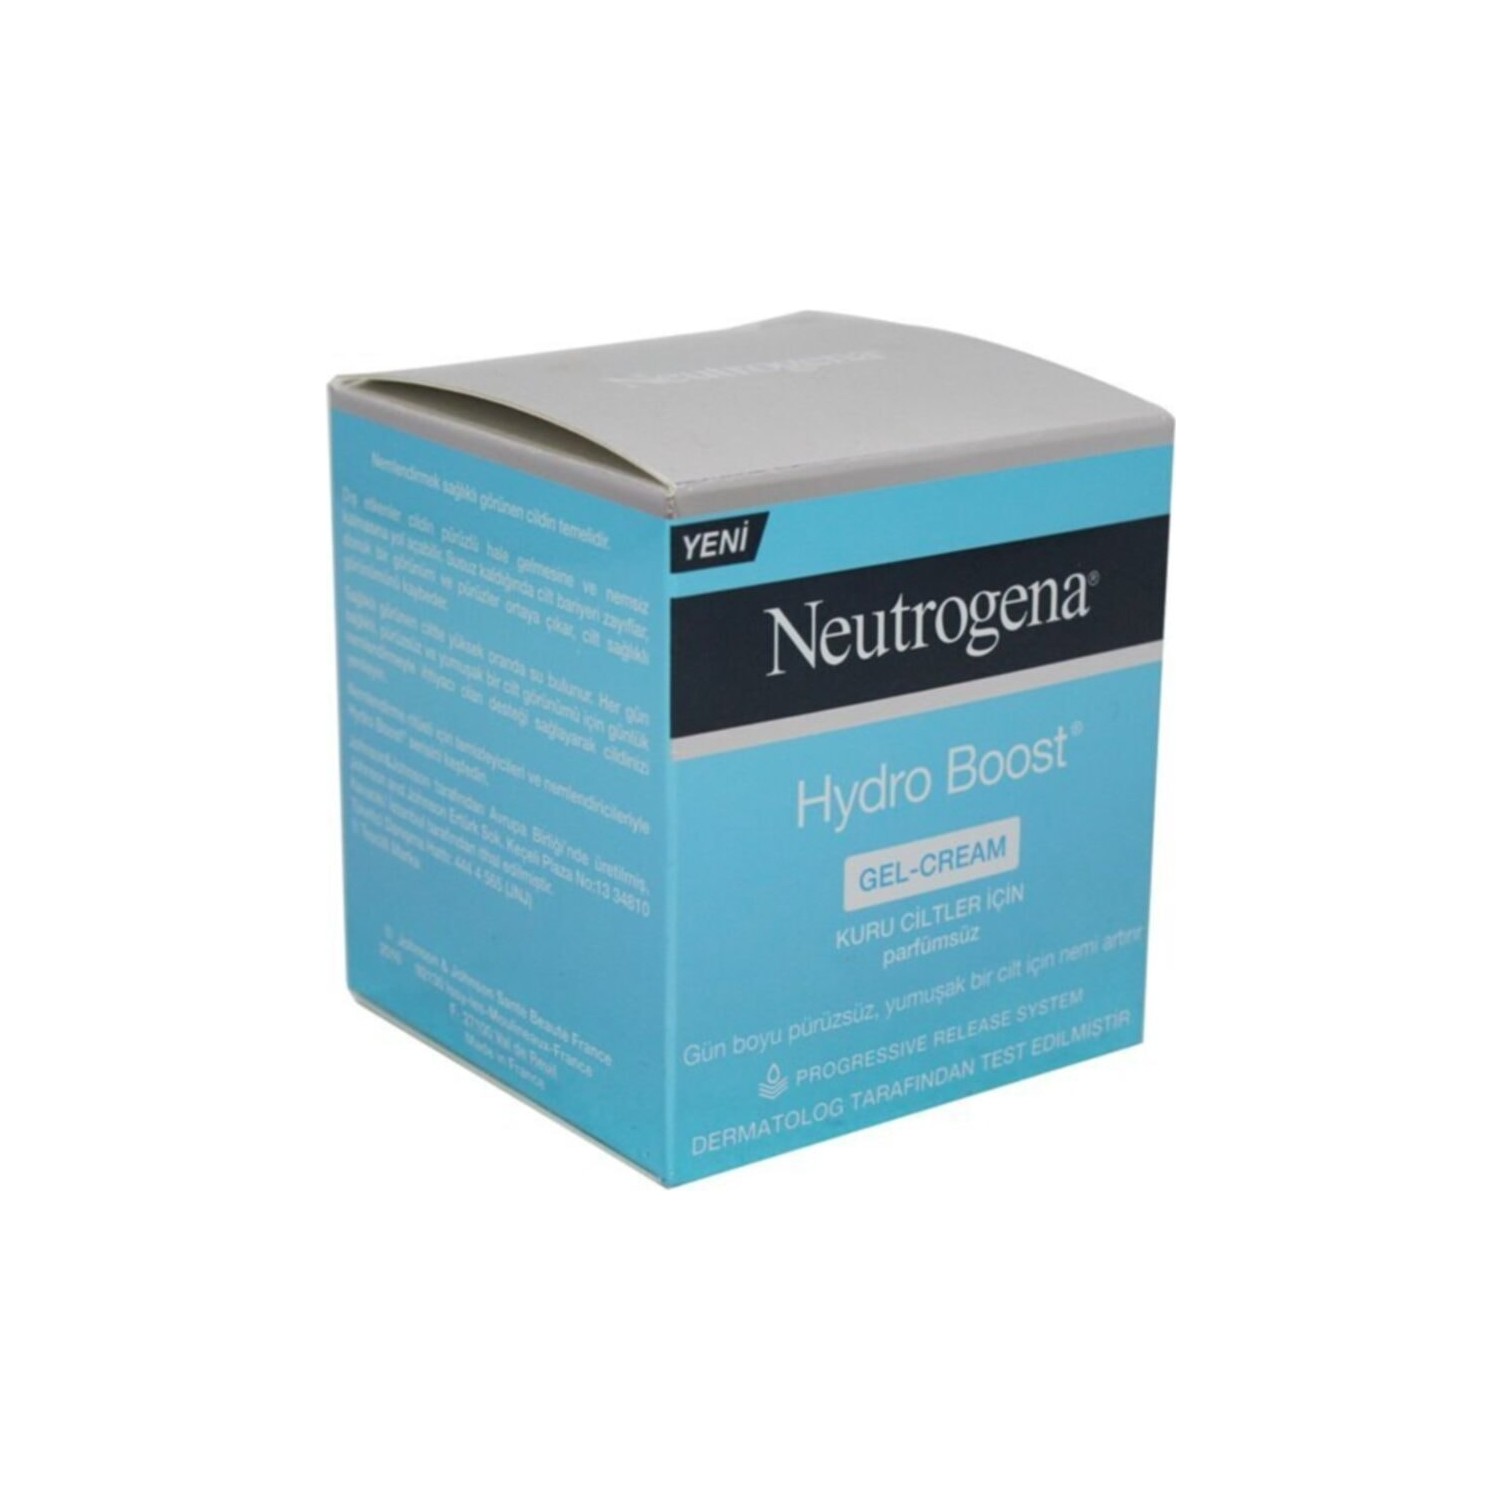 Гель-крем Neutrogena Hydro Boost для сухой кожи, 50 мл neutrogena cleansing water gel hydro boost 200 ml